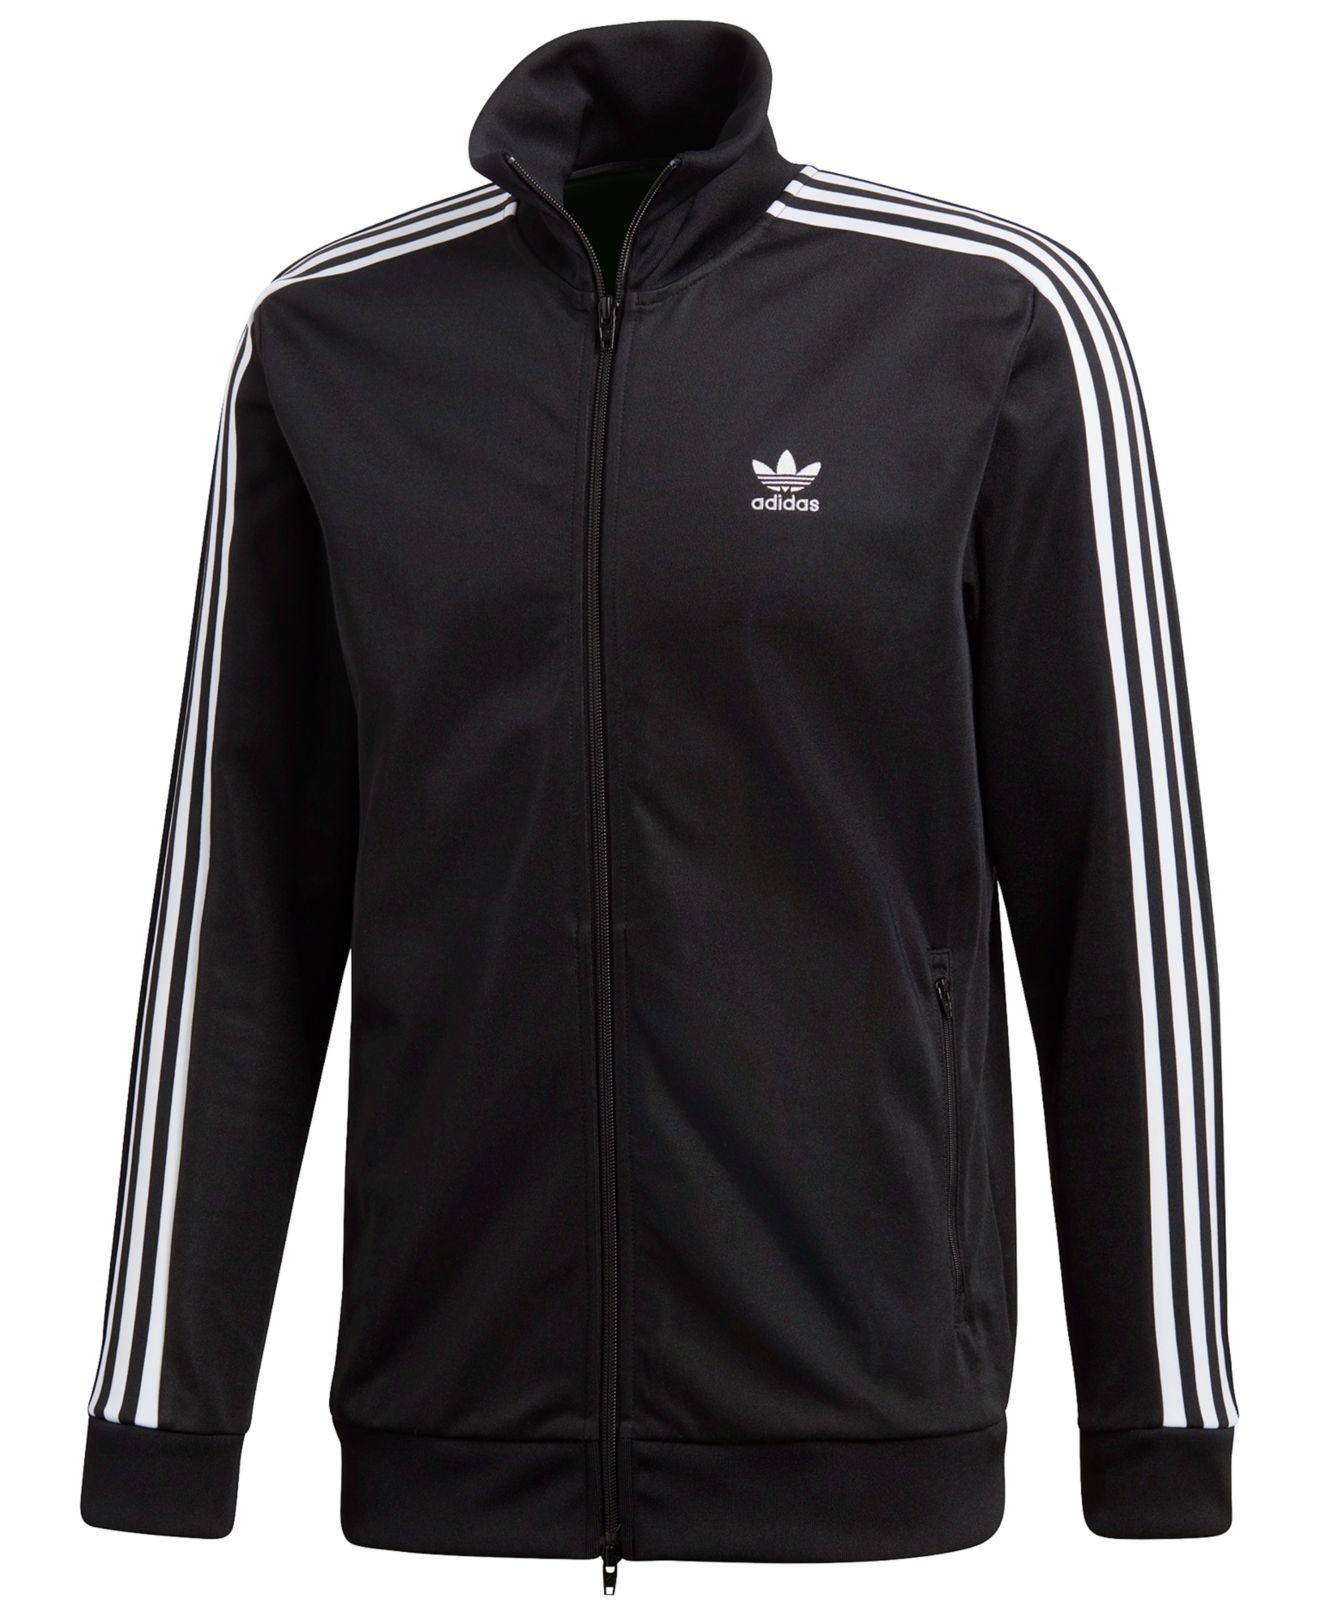 Lyst - Adidas Men's Beckenbauer Track Jacket in Black for Men